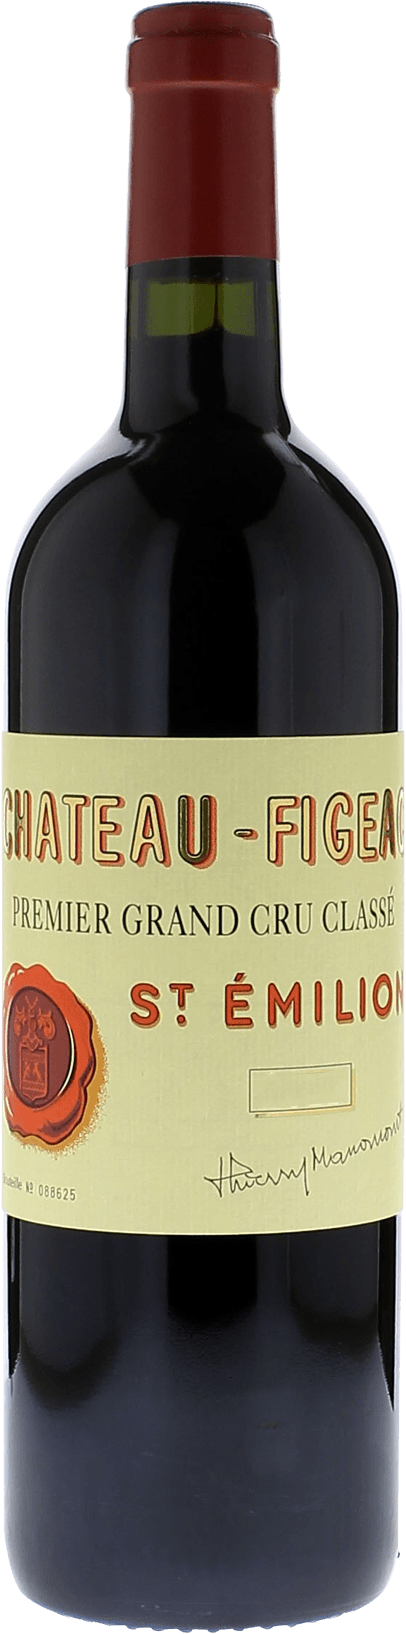 Figeac 2003 1er Grand cru B class Saint-Emilion, Bordeaux rouge